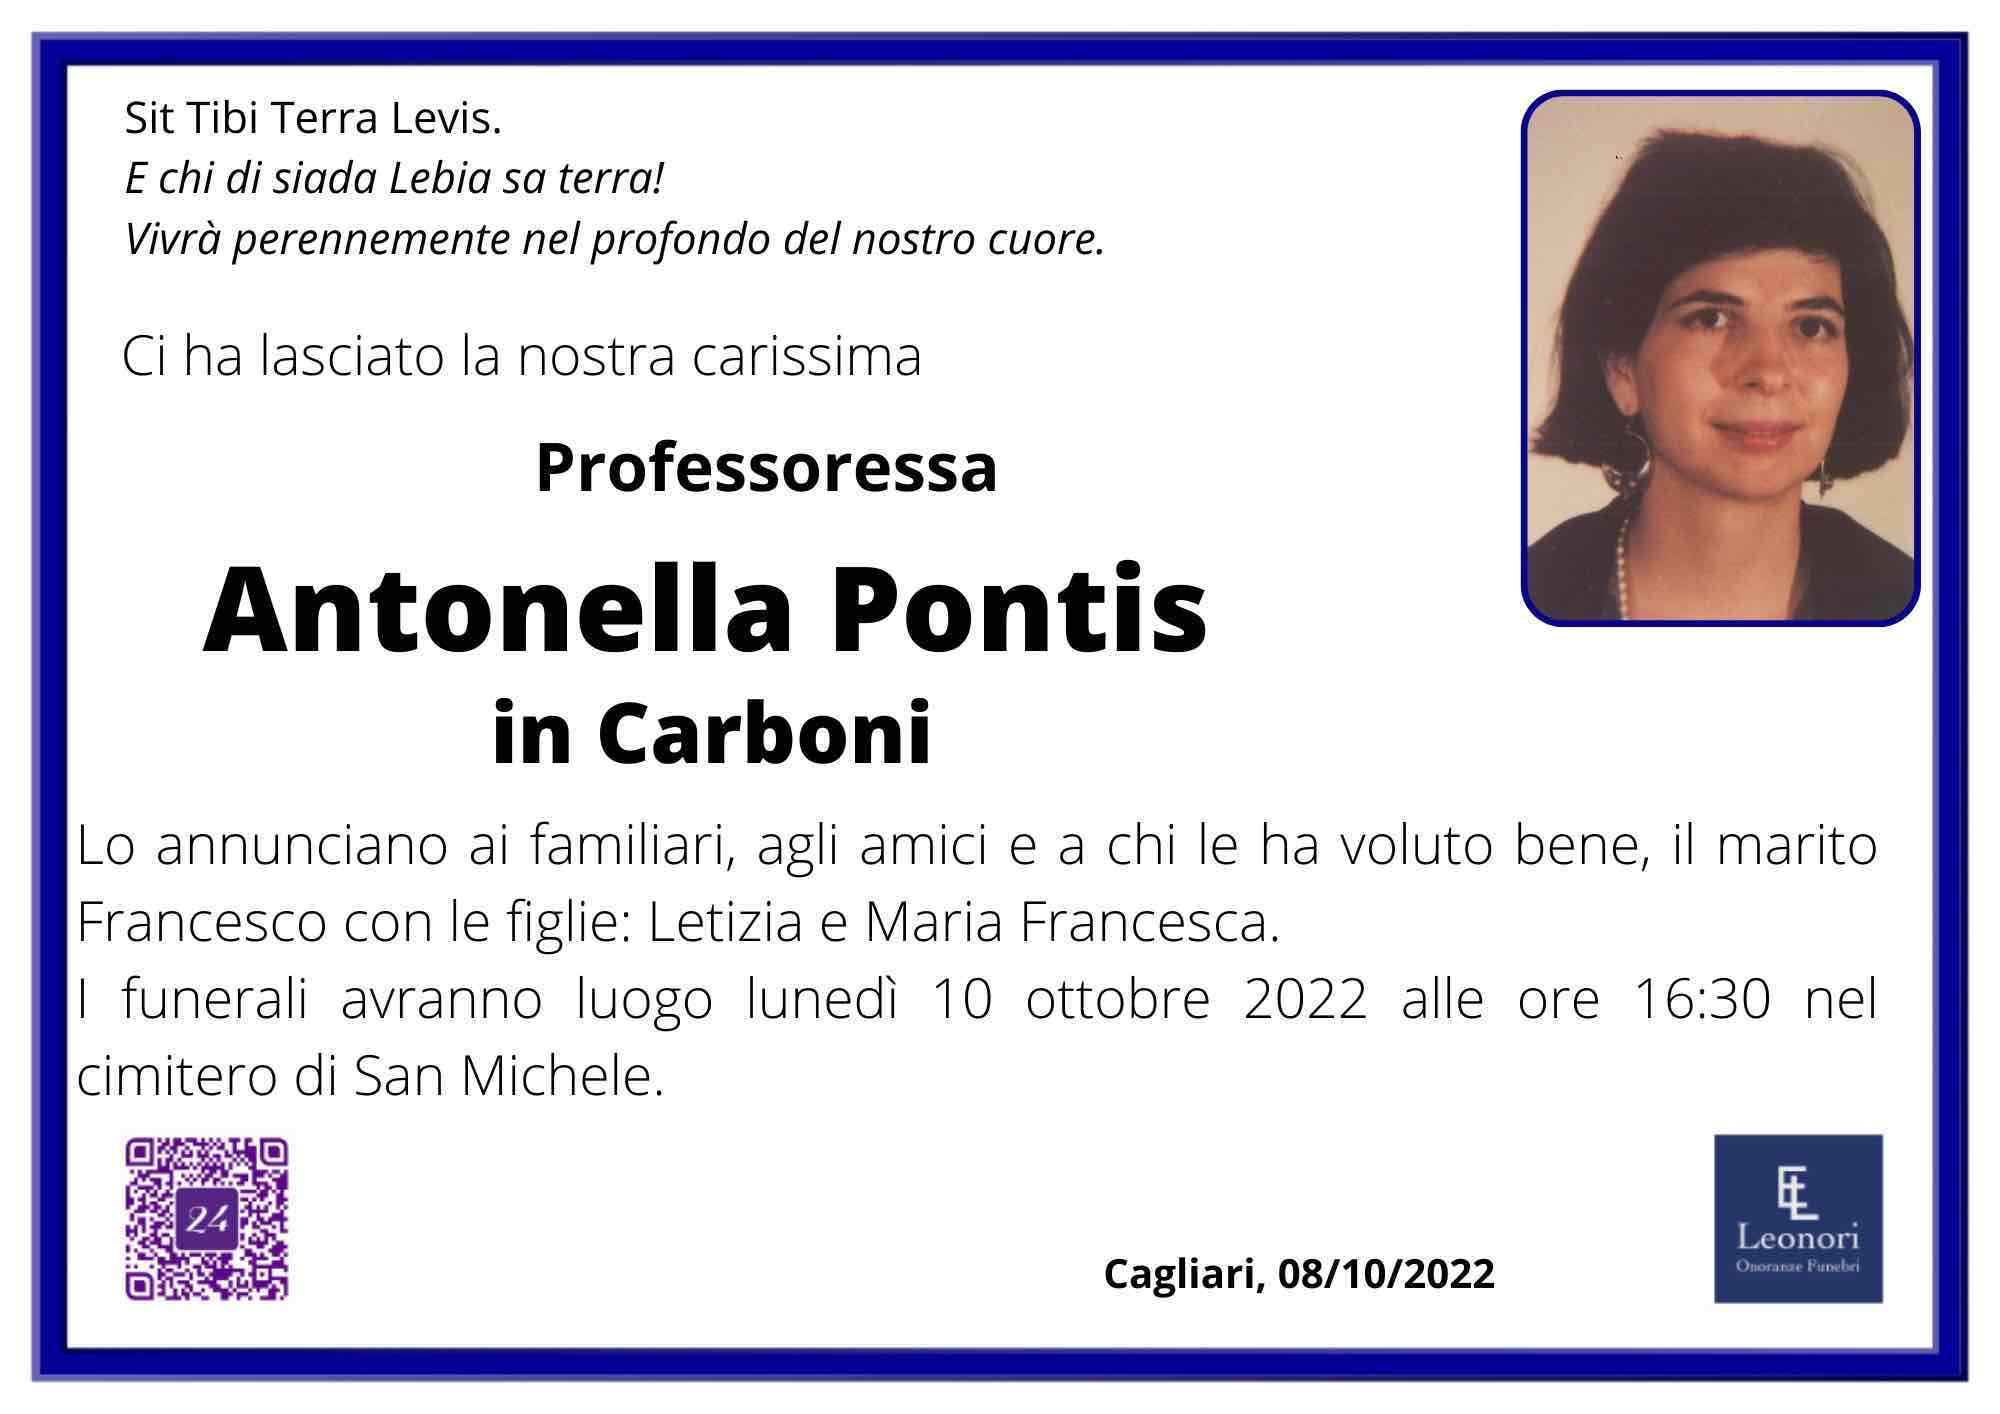 Antonella Pontis